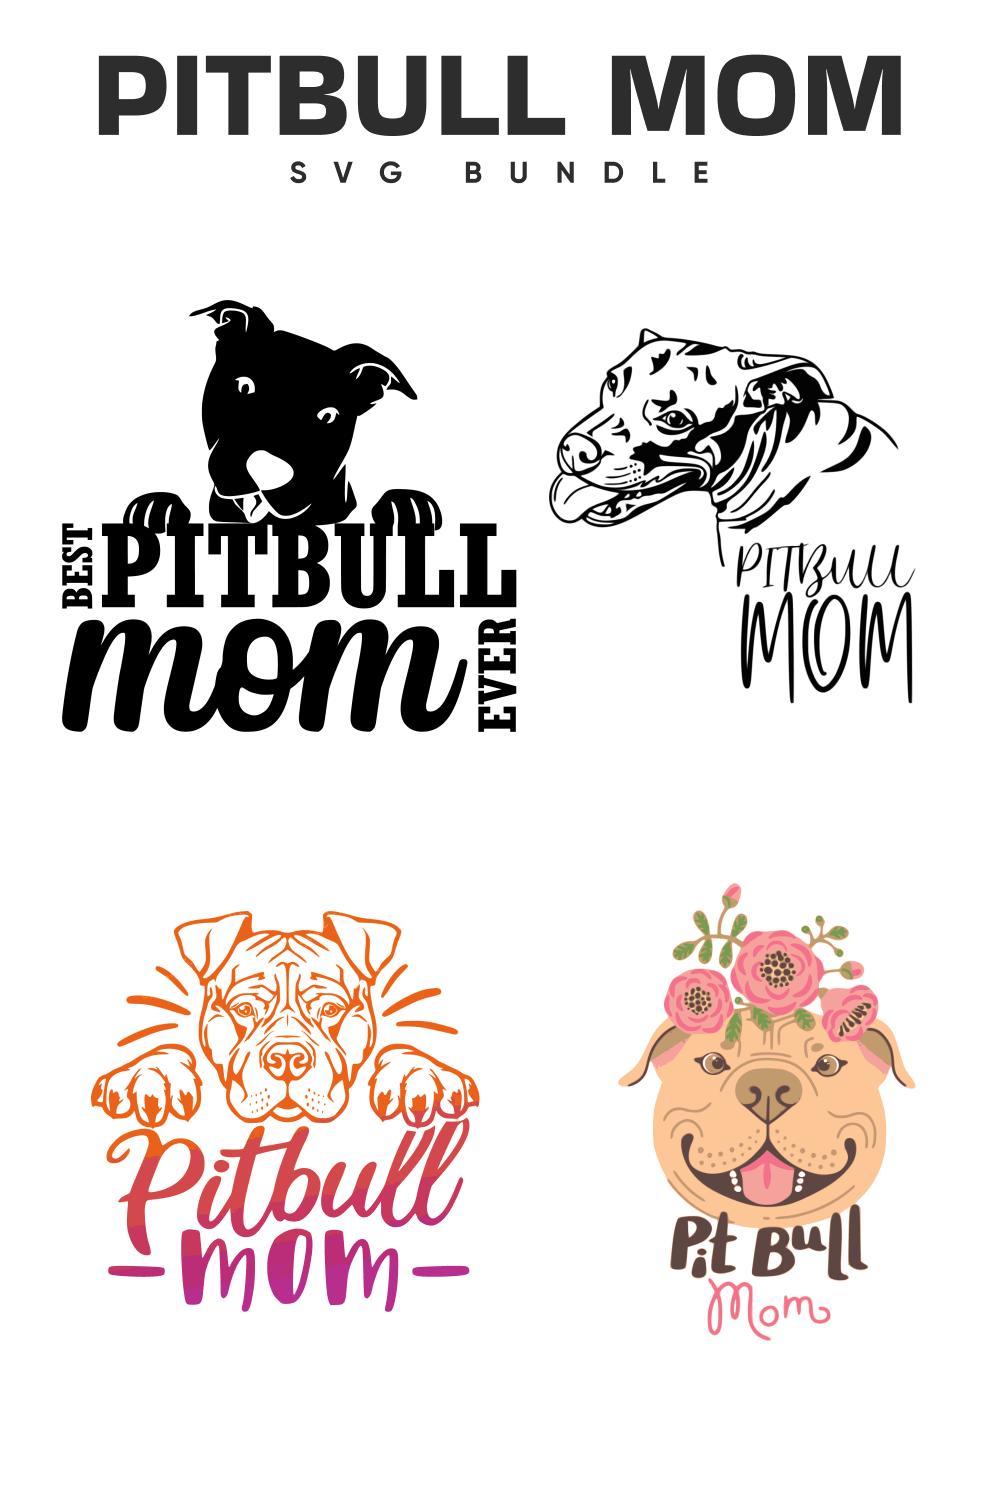 The pitbull mom svg bundle includes a pitbull mom svg.